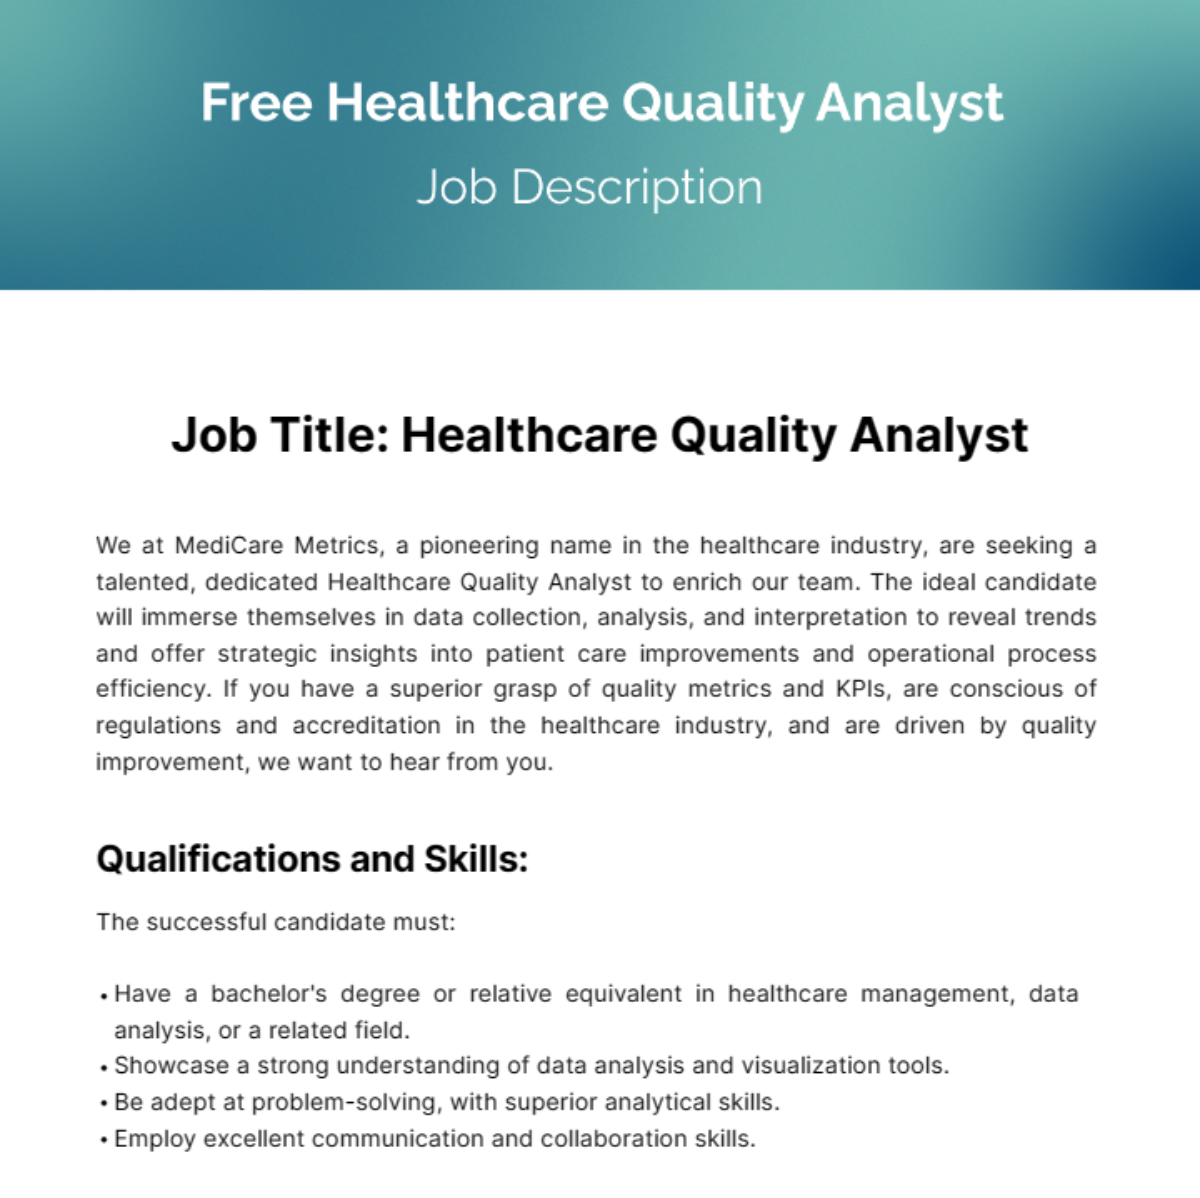 Free Healthcare Quality Analyst Job Description Template